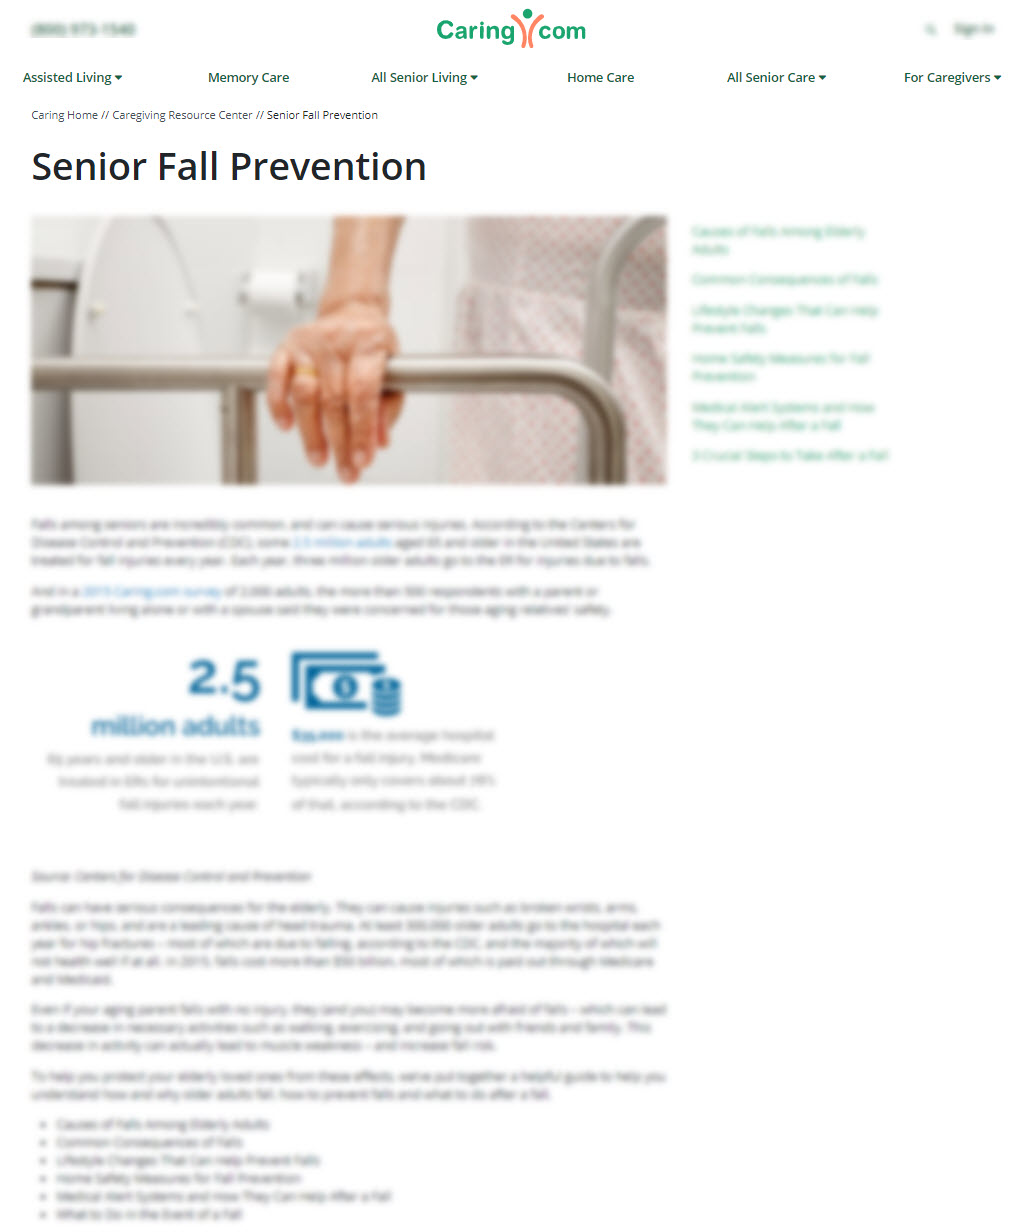 Senior Fall Prevention